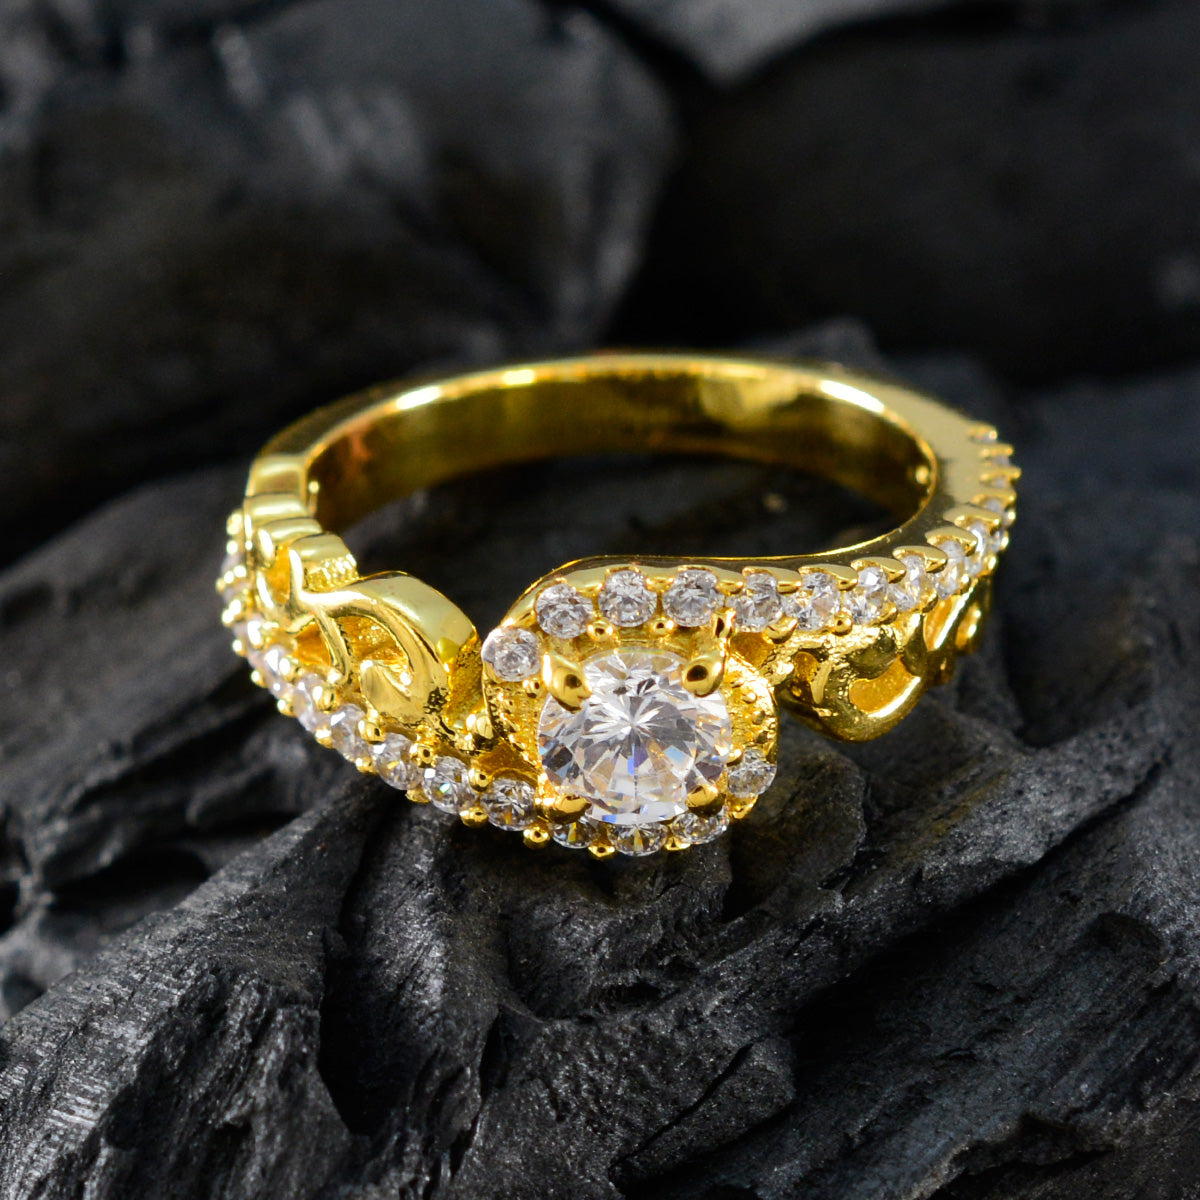 Riyo Elegant Silver Ring With Yellow Gold Plating White CZ Stone Round Shape Prong Setting Fashion Jewelry Thanksgiving Ring